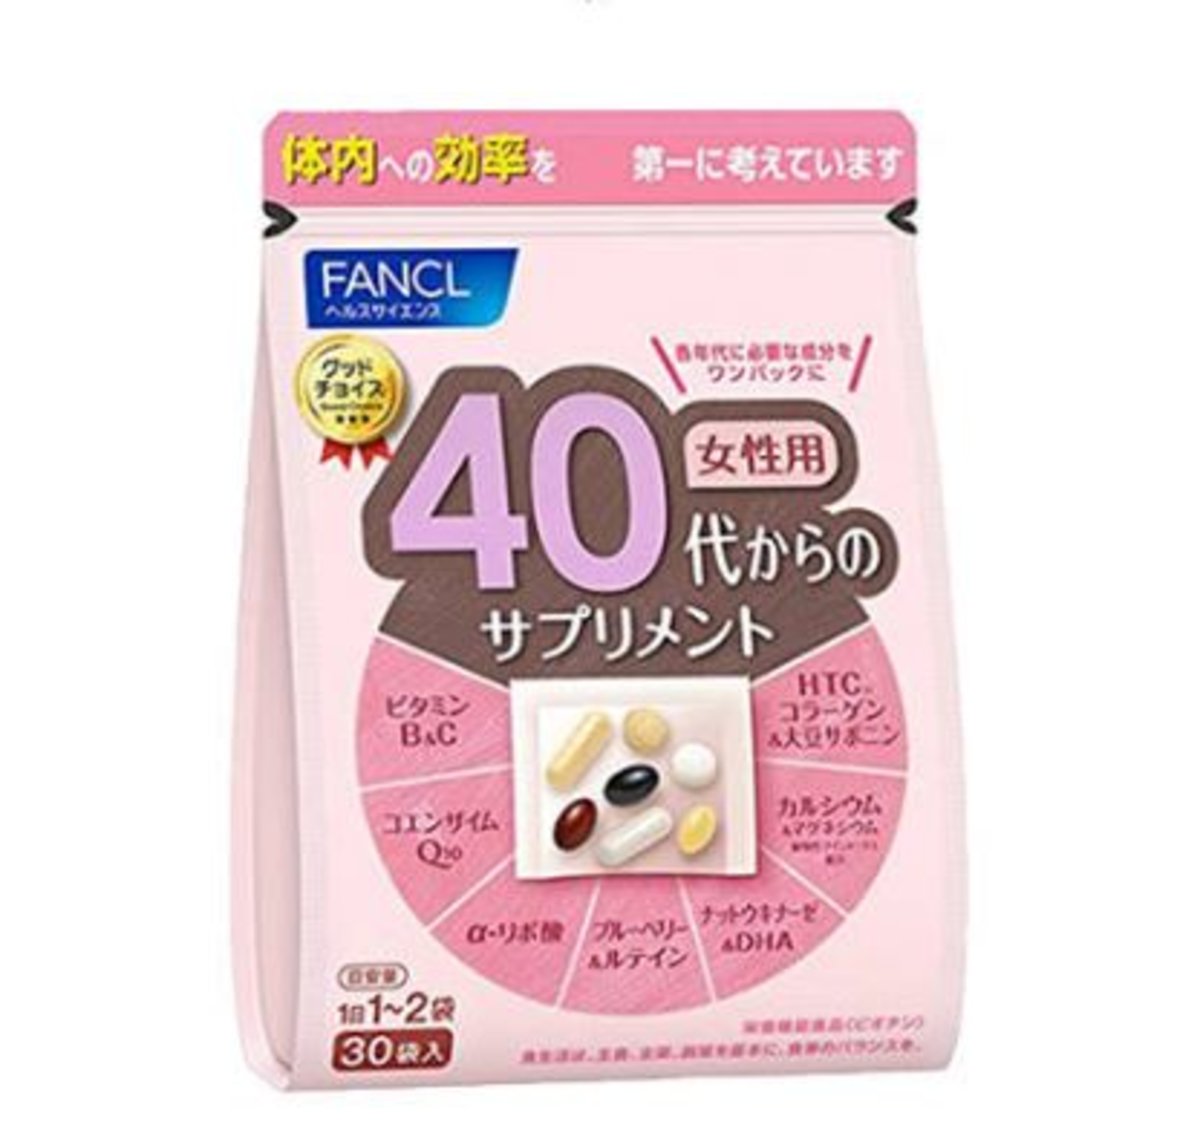 Fancl 40代女性綜合營養維他命補充丸 30小包 粉色 香港電視hktvmall 網上購物